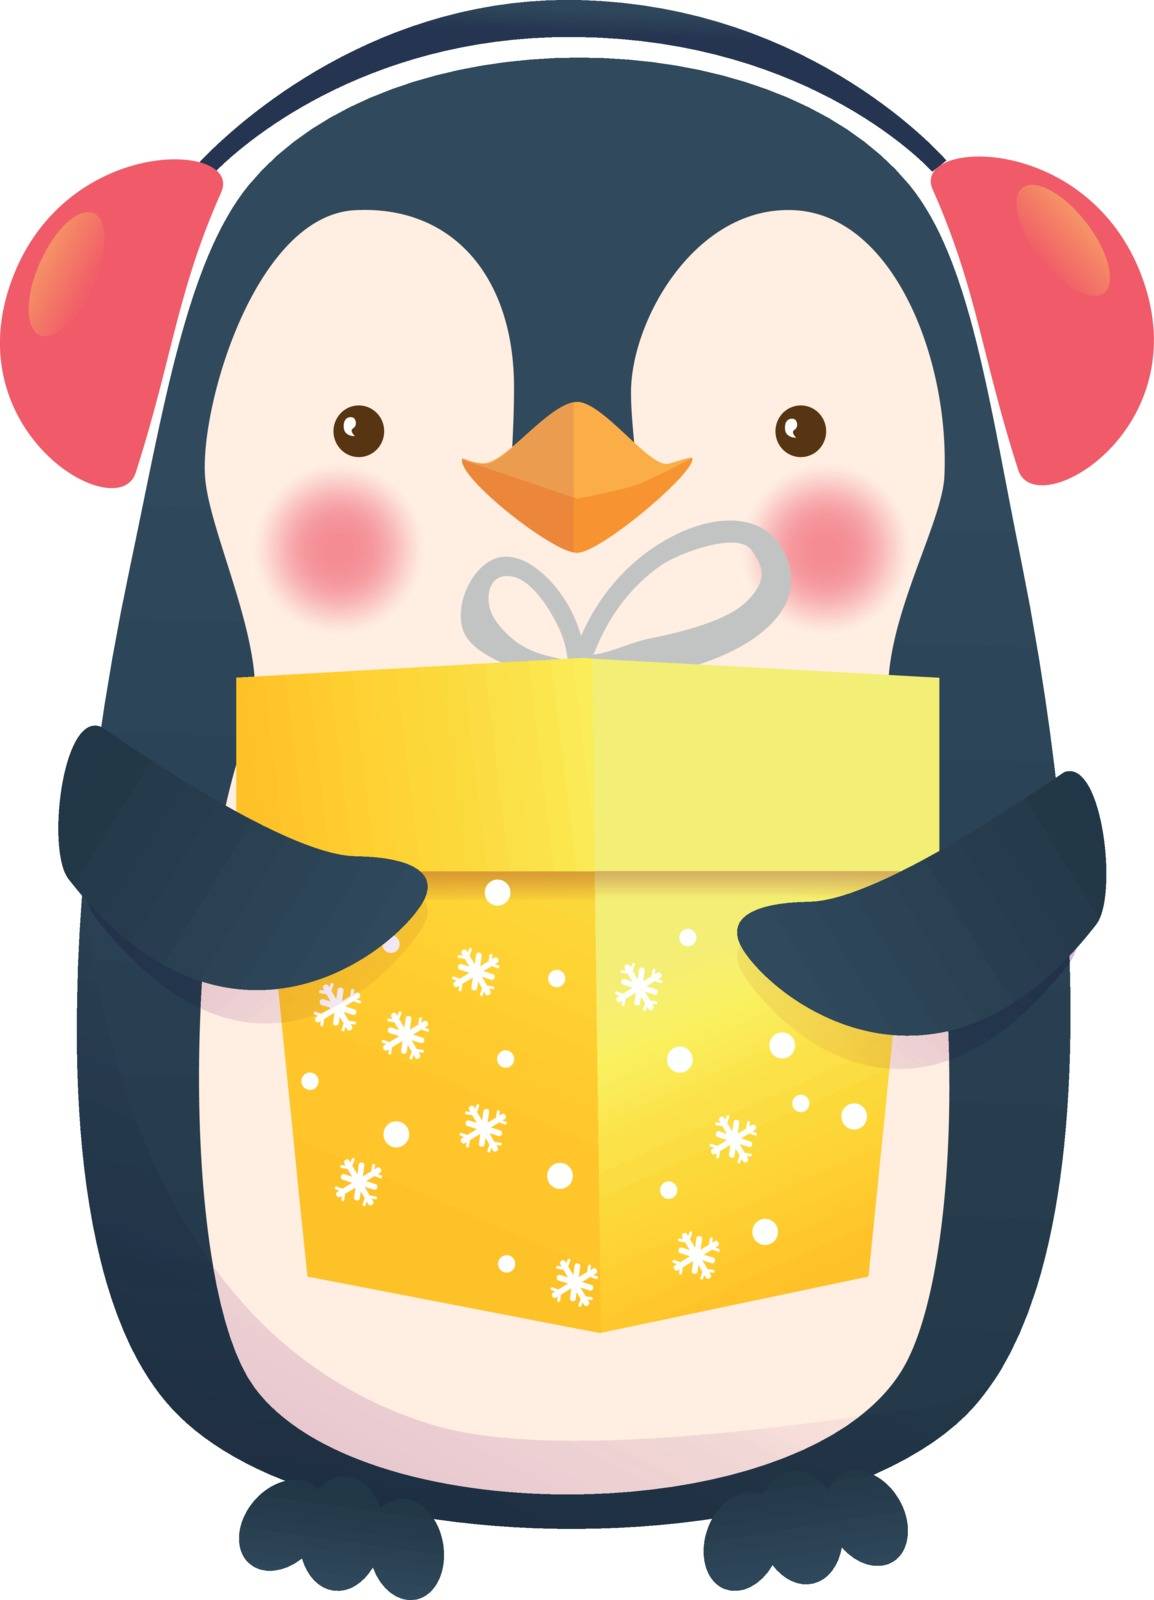 Penguin with gift. Penguin cartoon vector illustration.